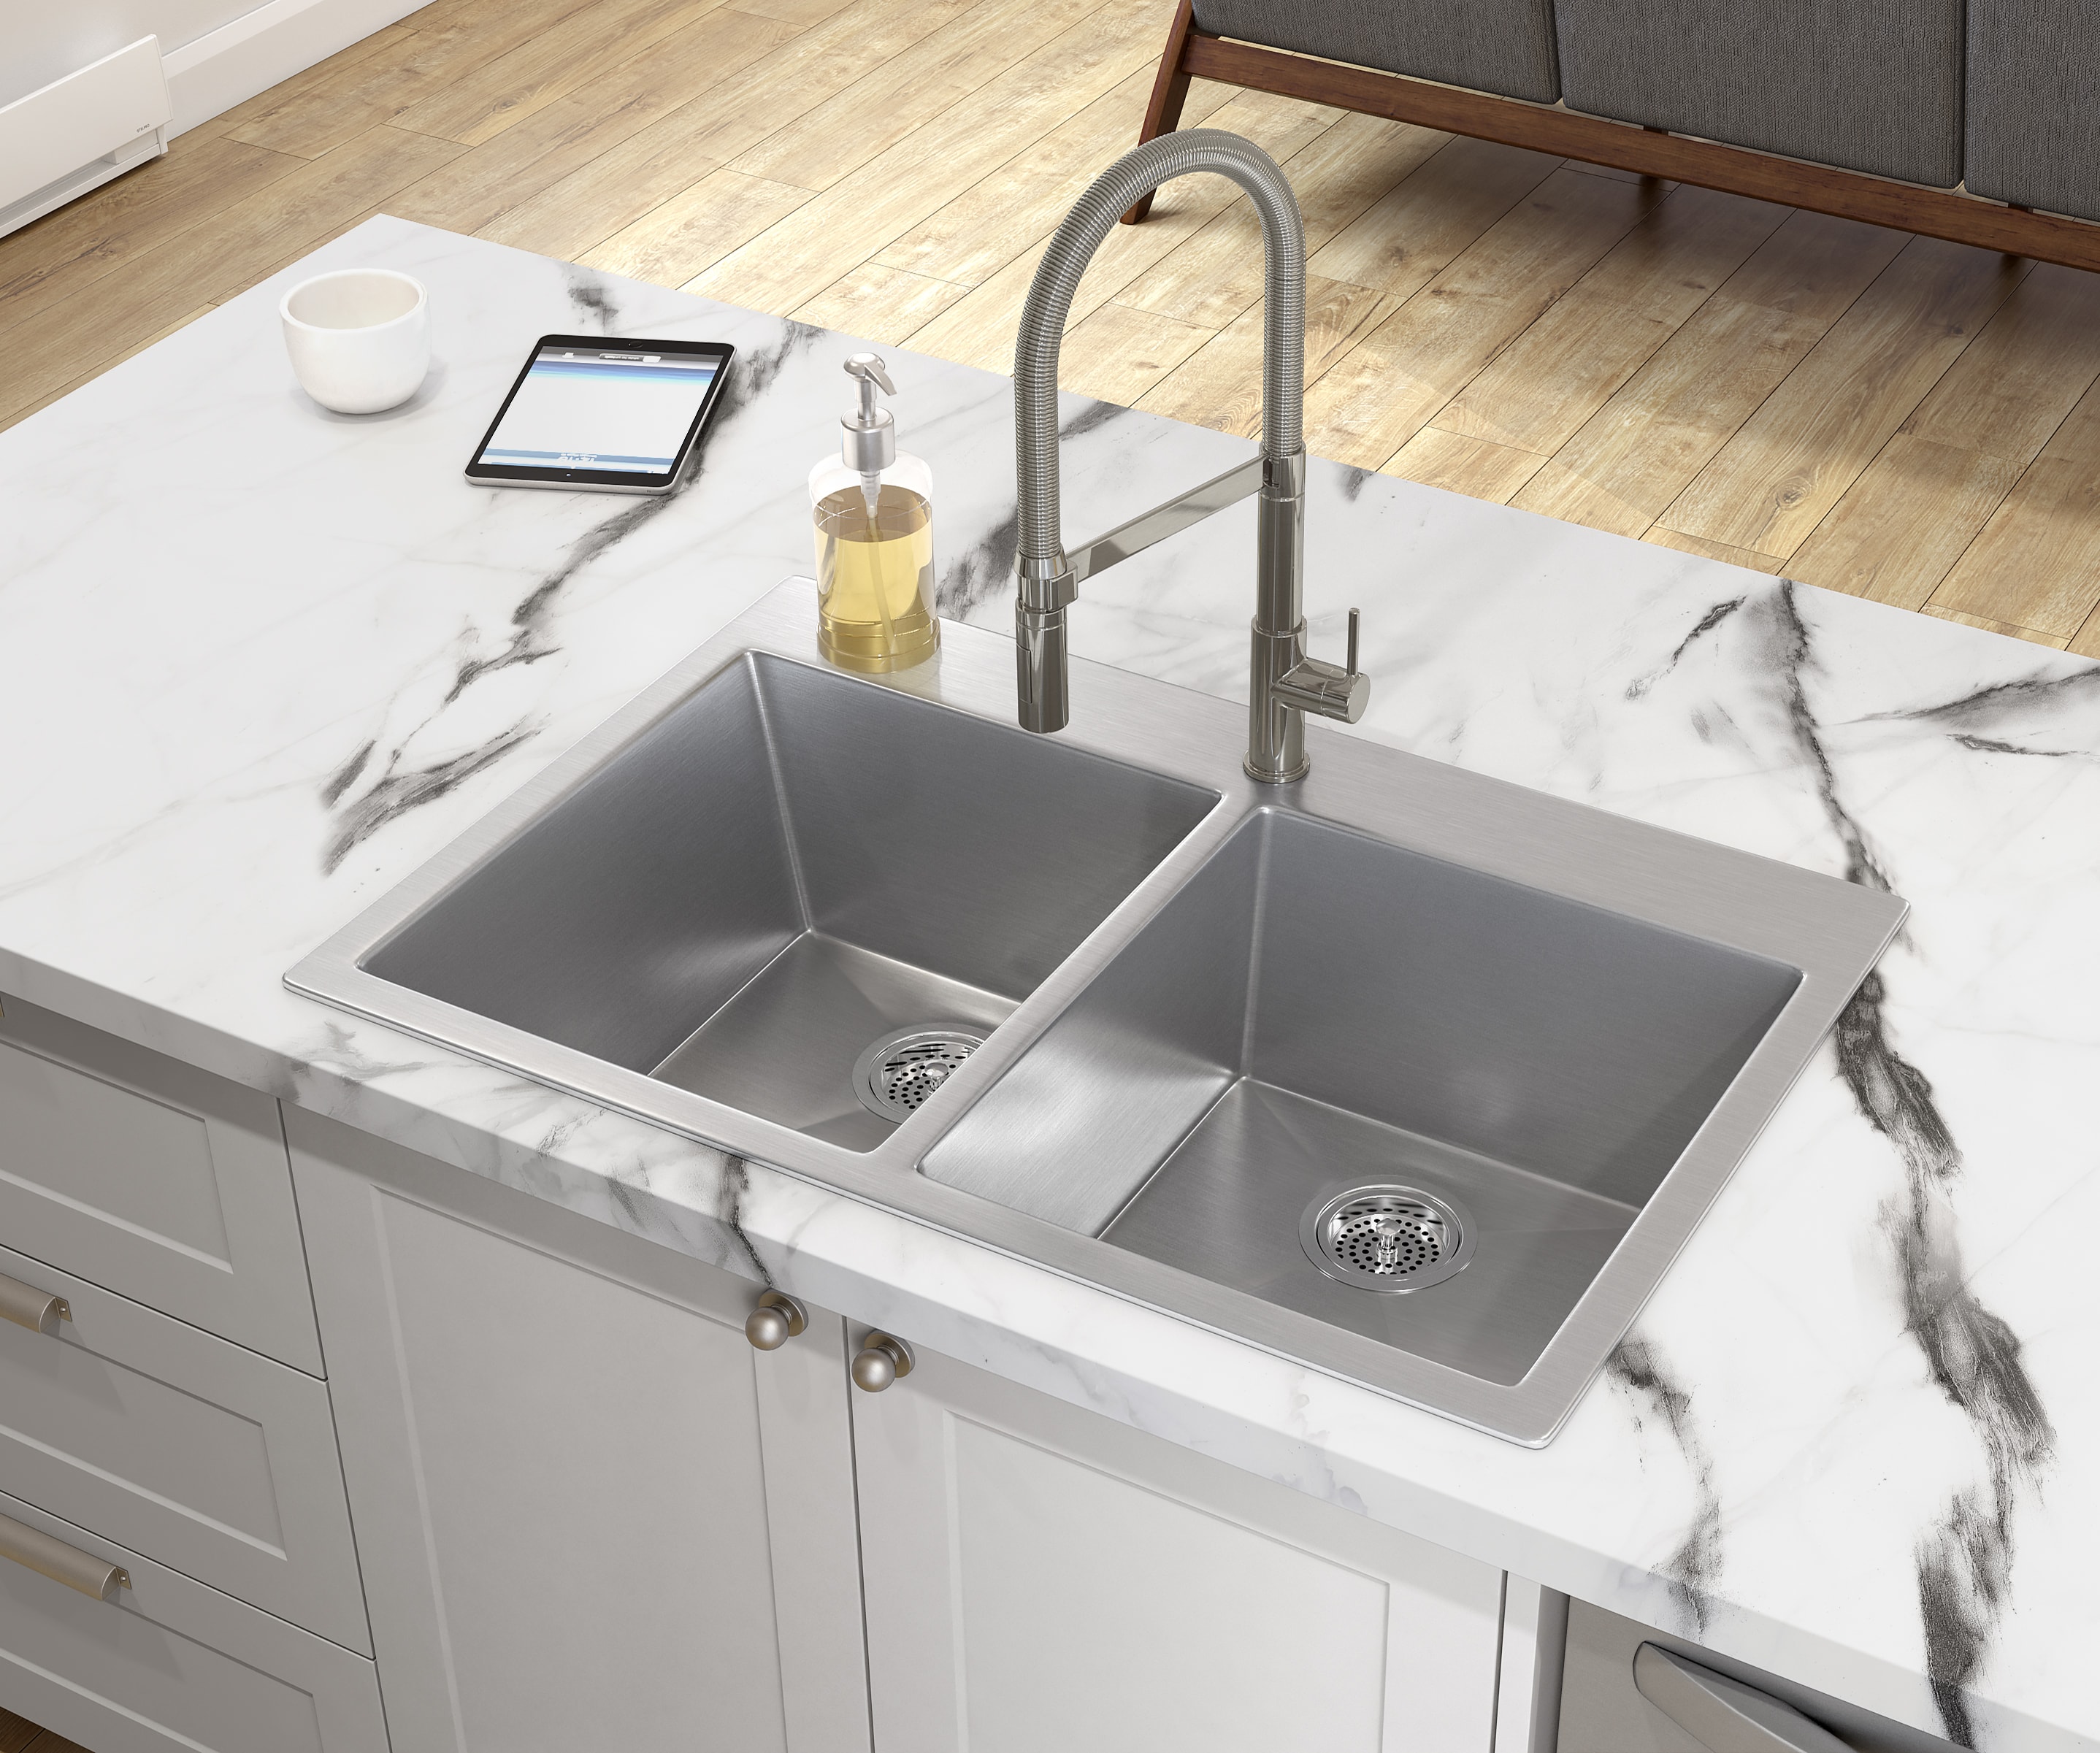 Double stainless-steel kitchen sink